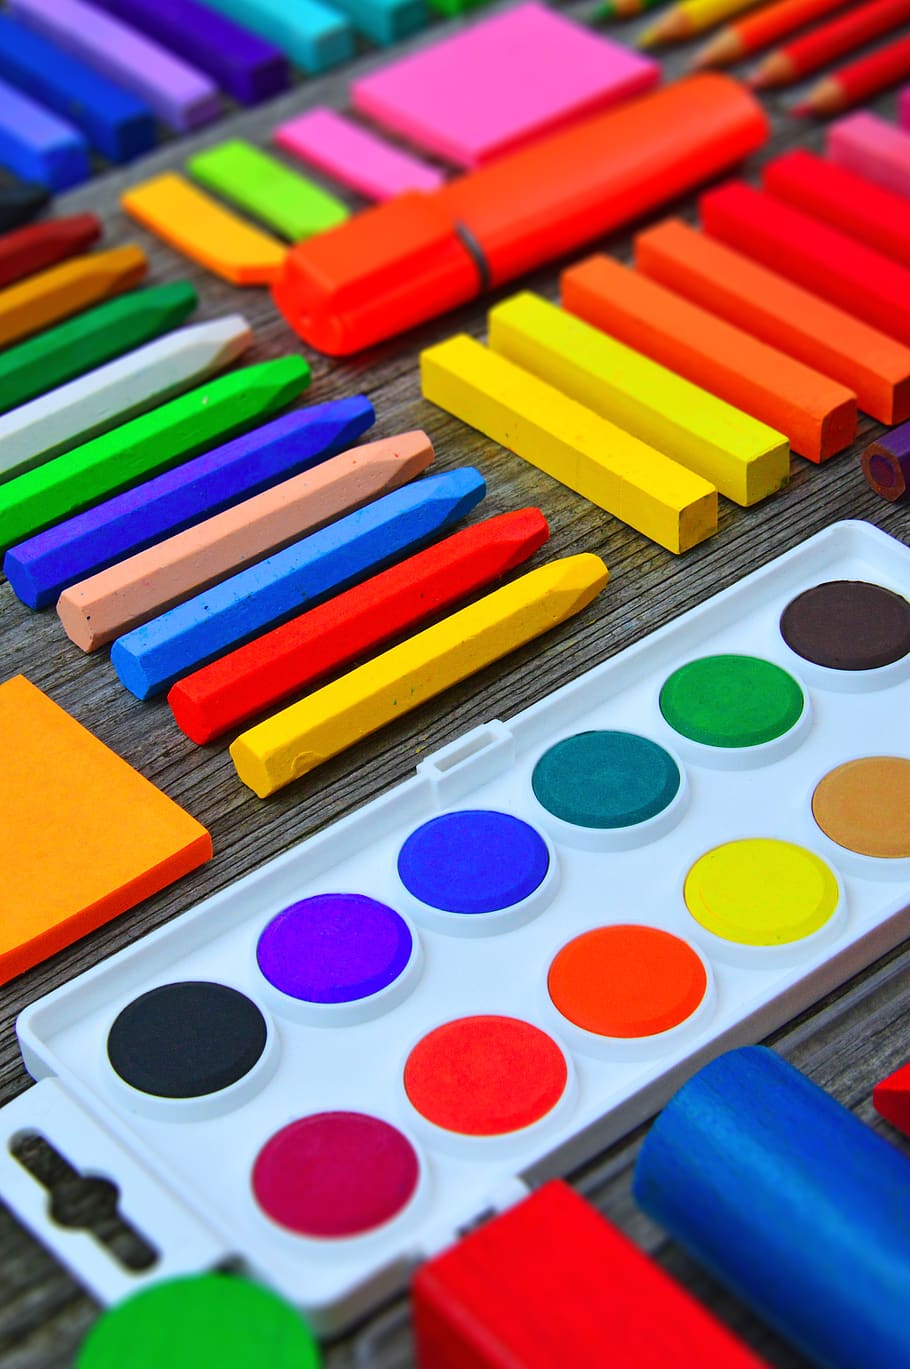 school times, school school supplies, brushes, crayon, education